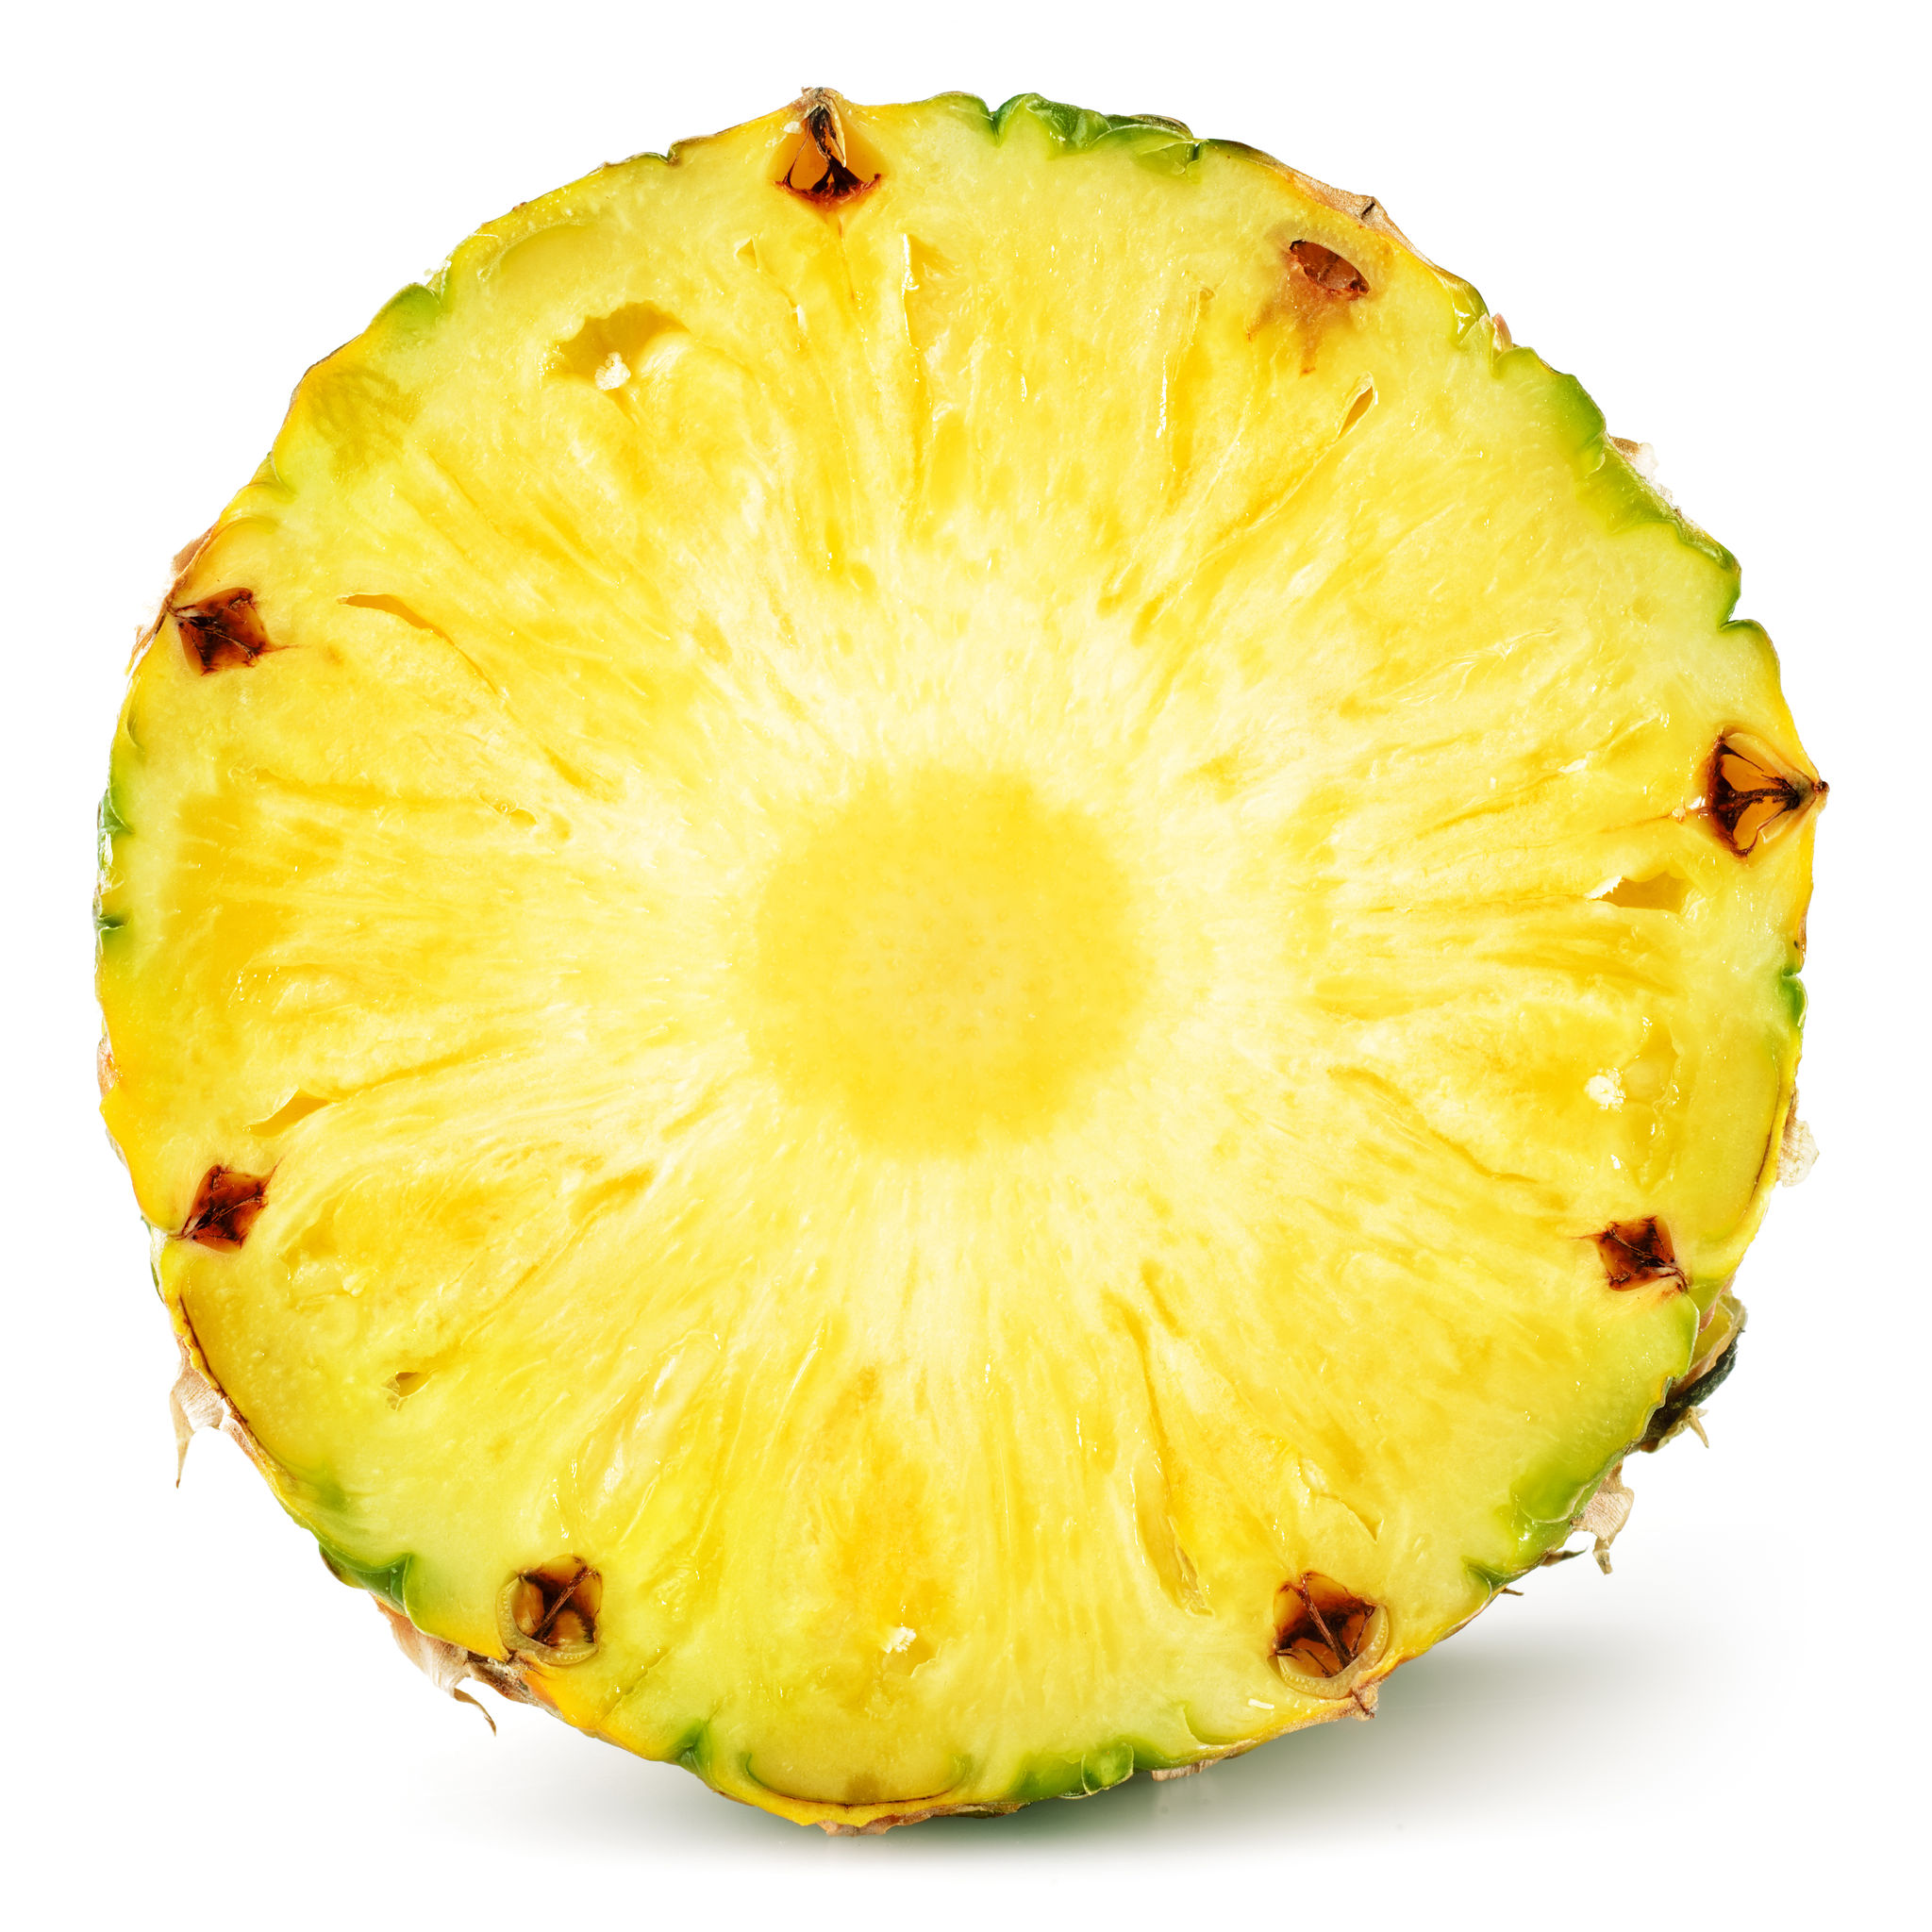 pineapple round slice isolated on white background.